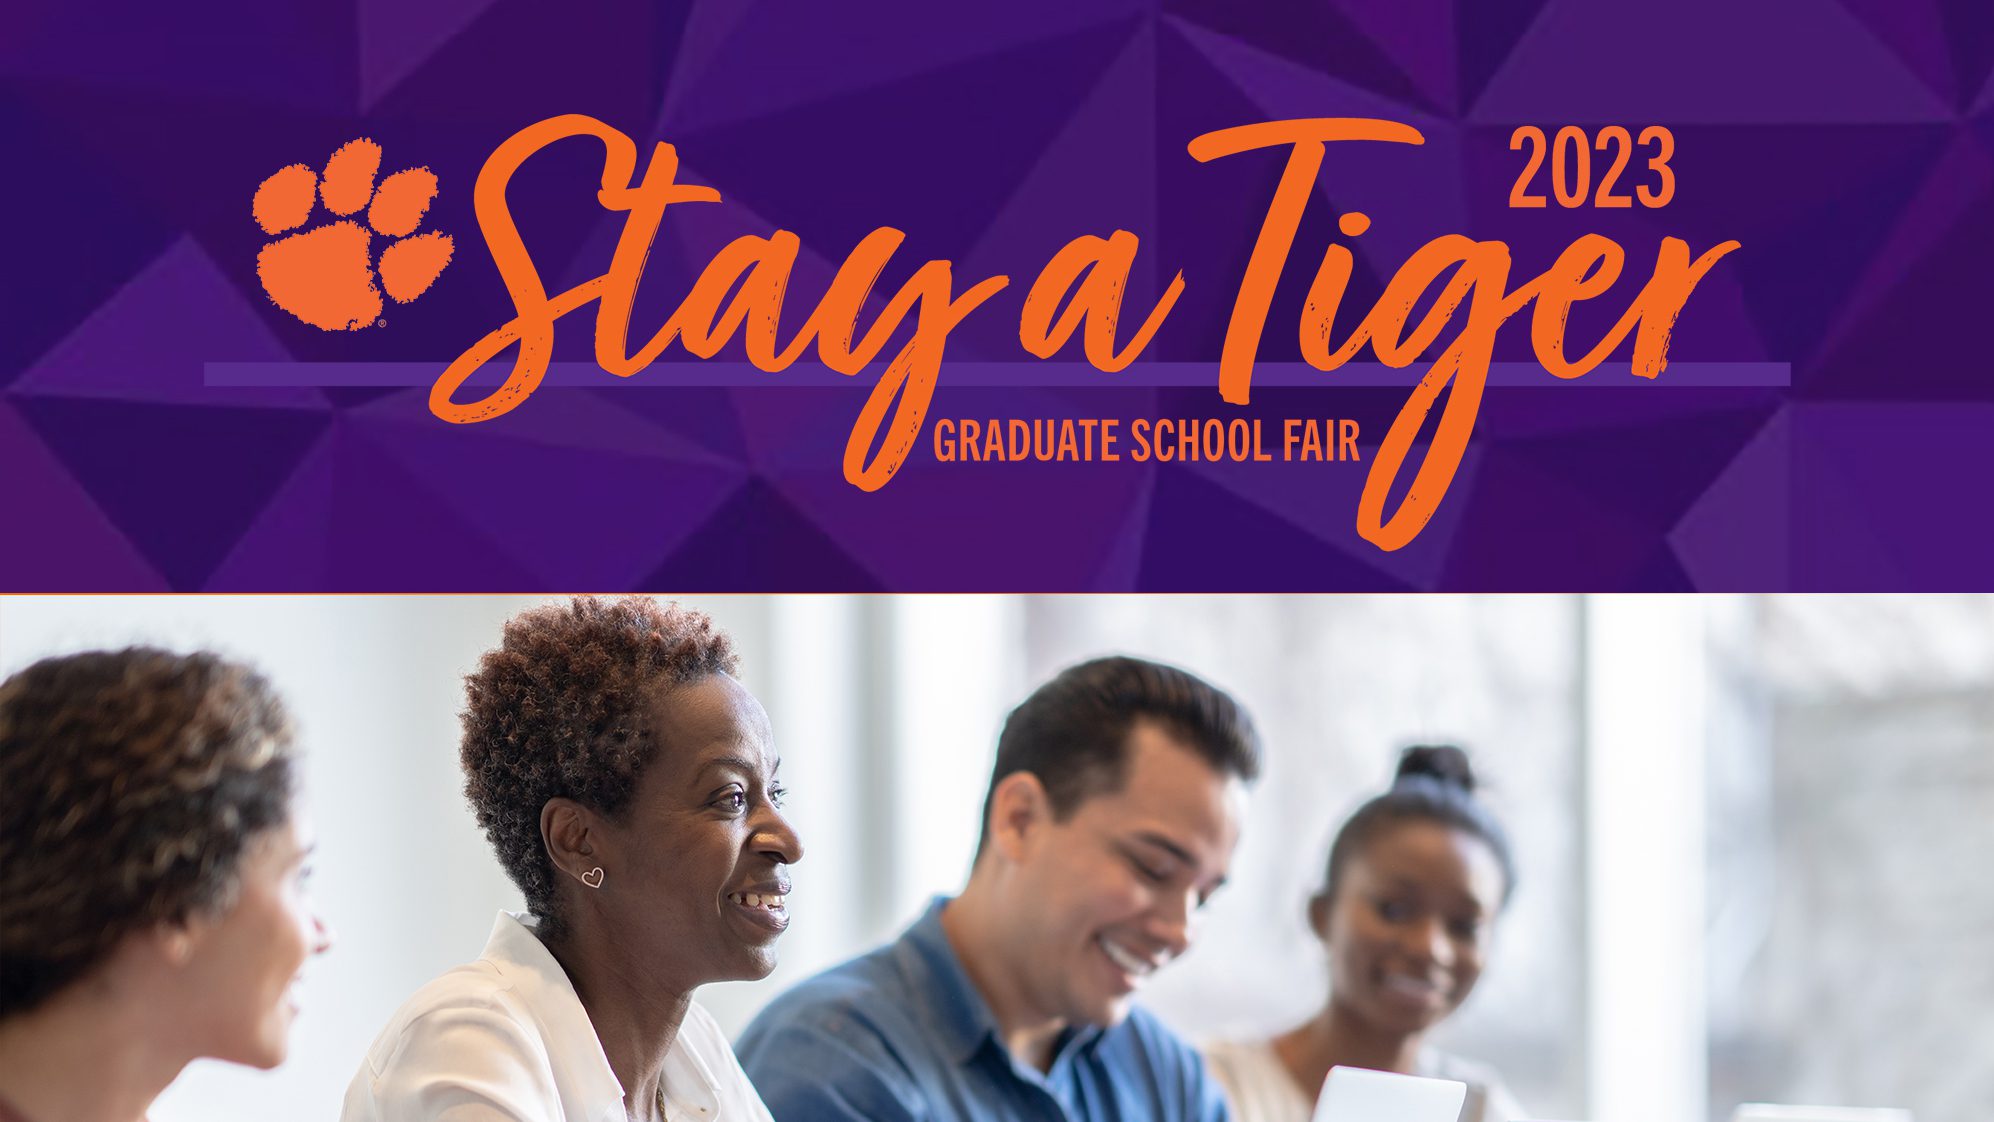 2023 Stay a Tiger graduate school fair flyer